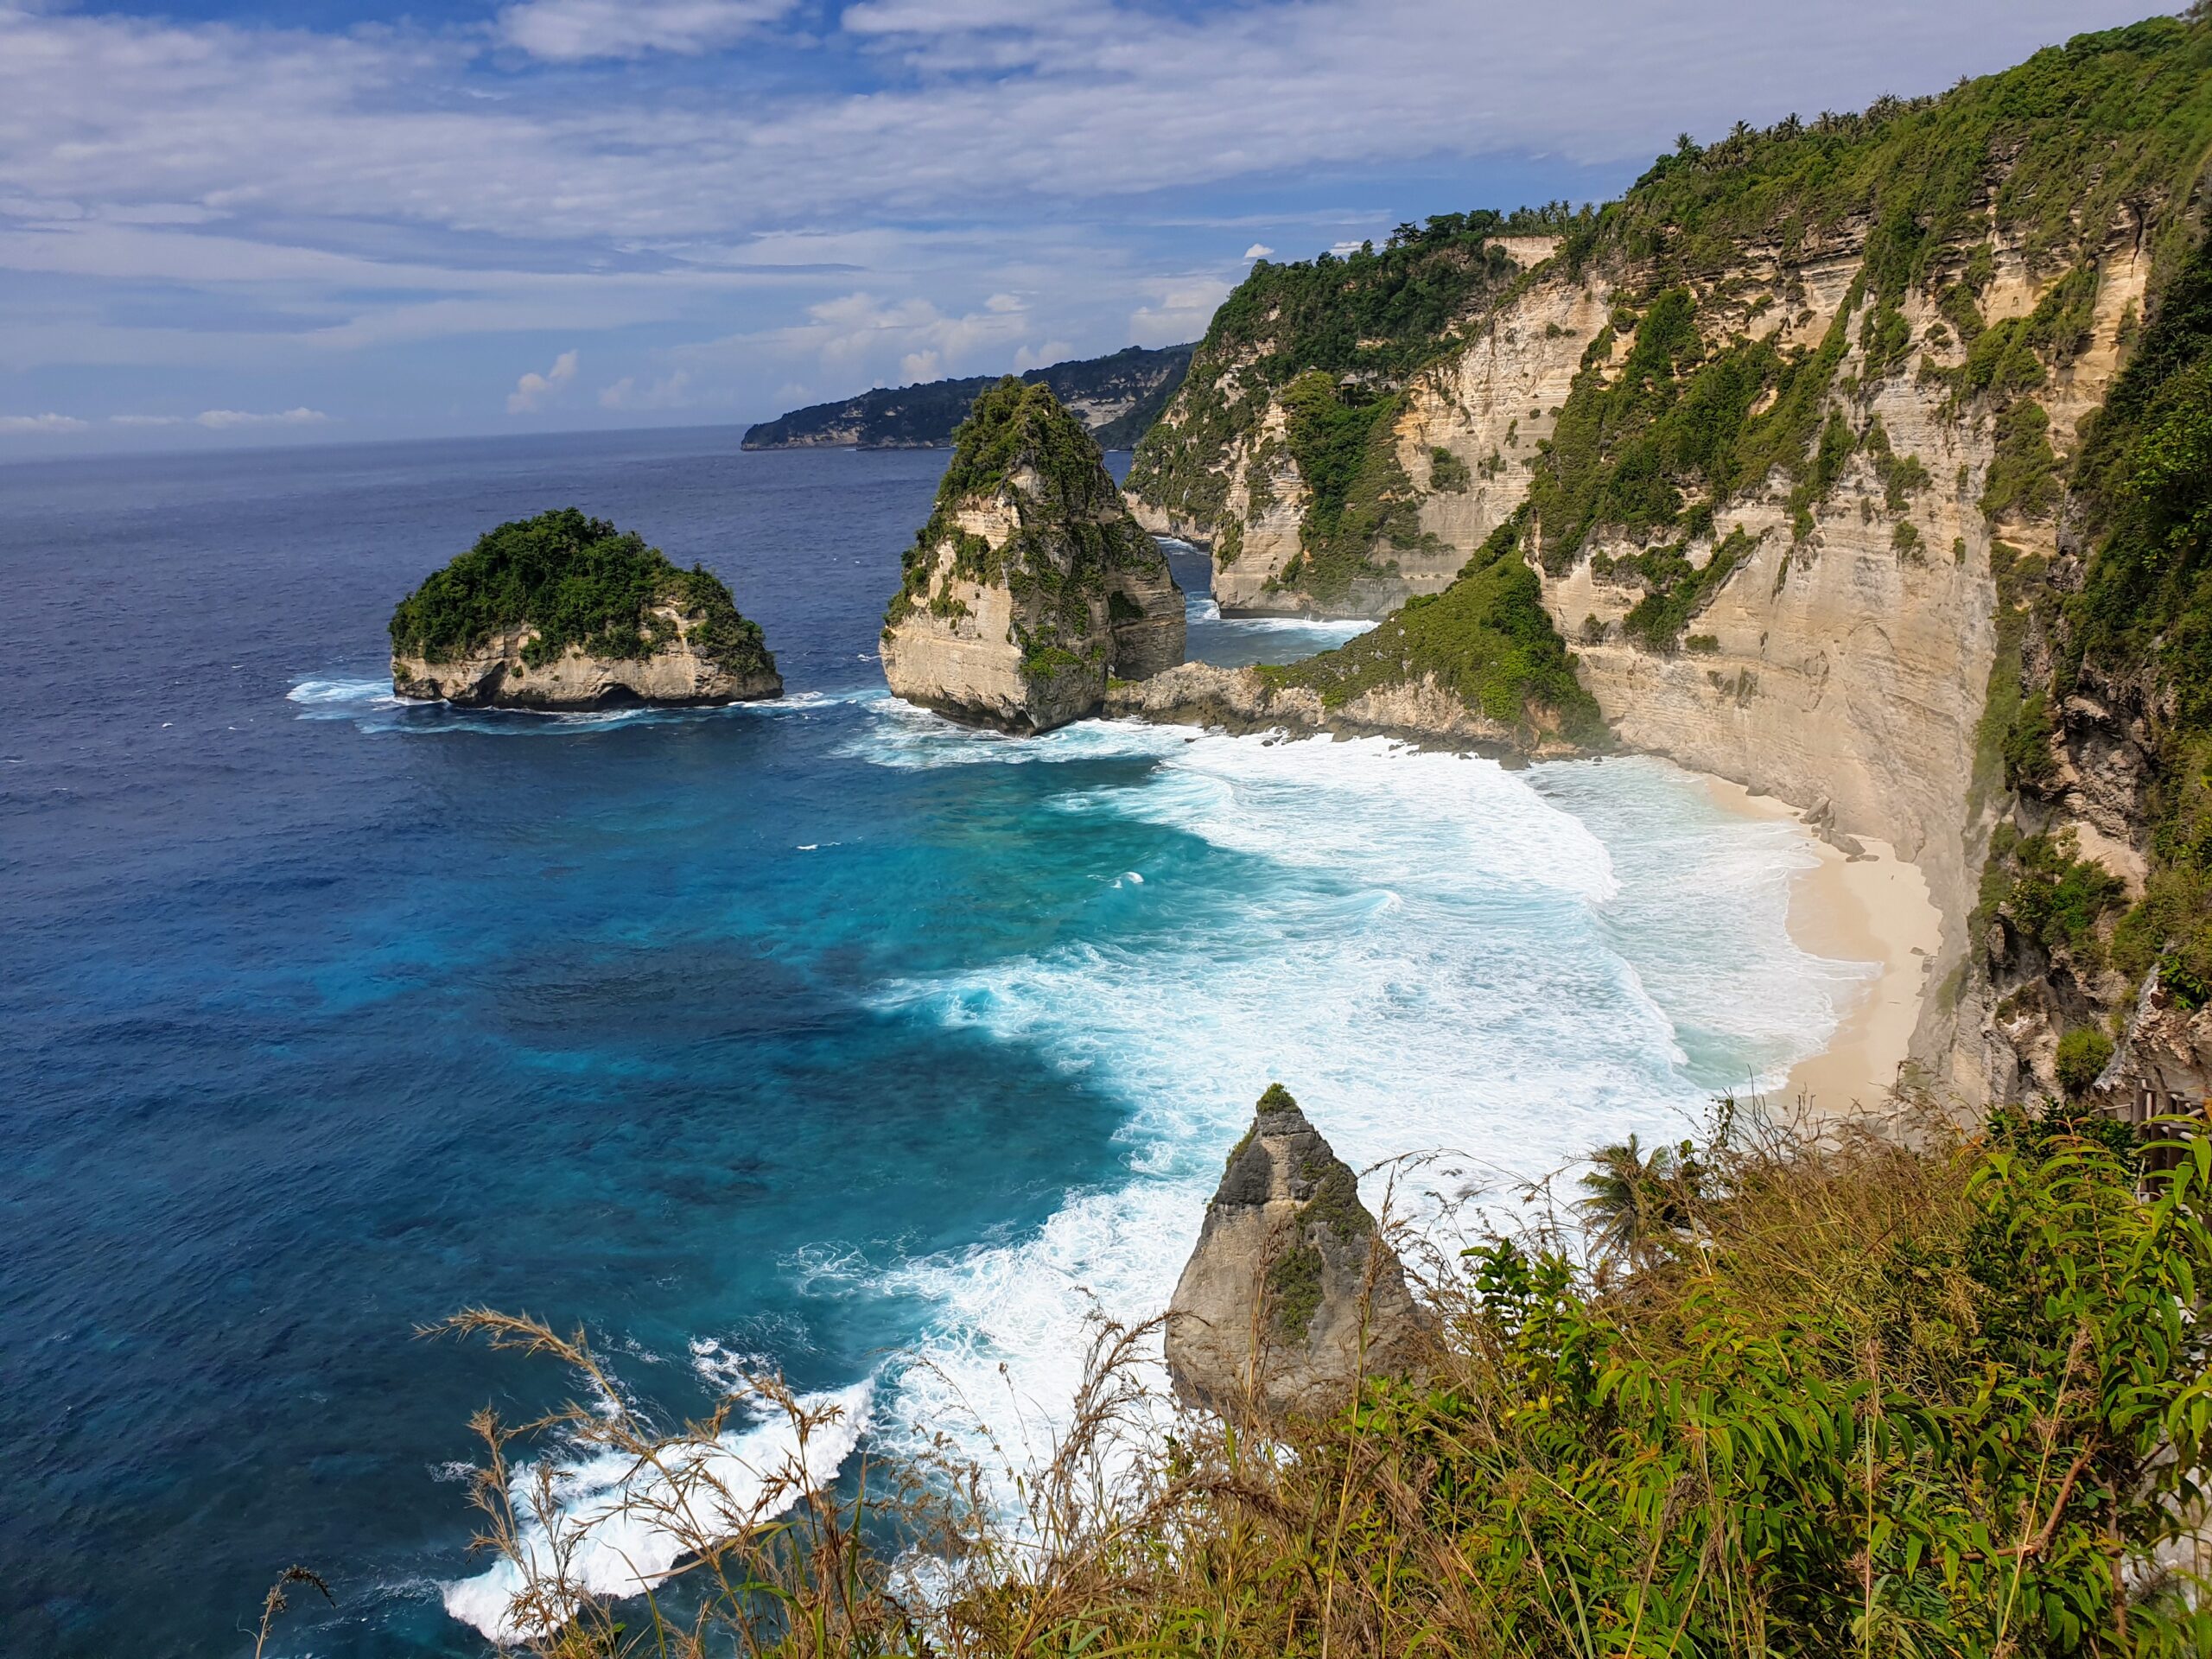 Destinasti Keindahan Wisata Pantai Atuh di Nusapenida Klungkung Bali